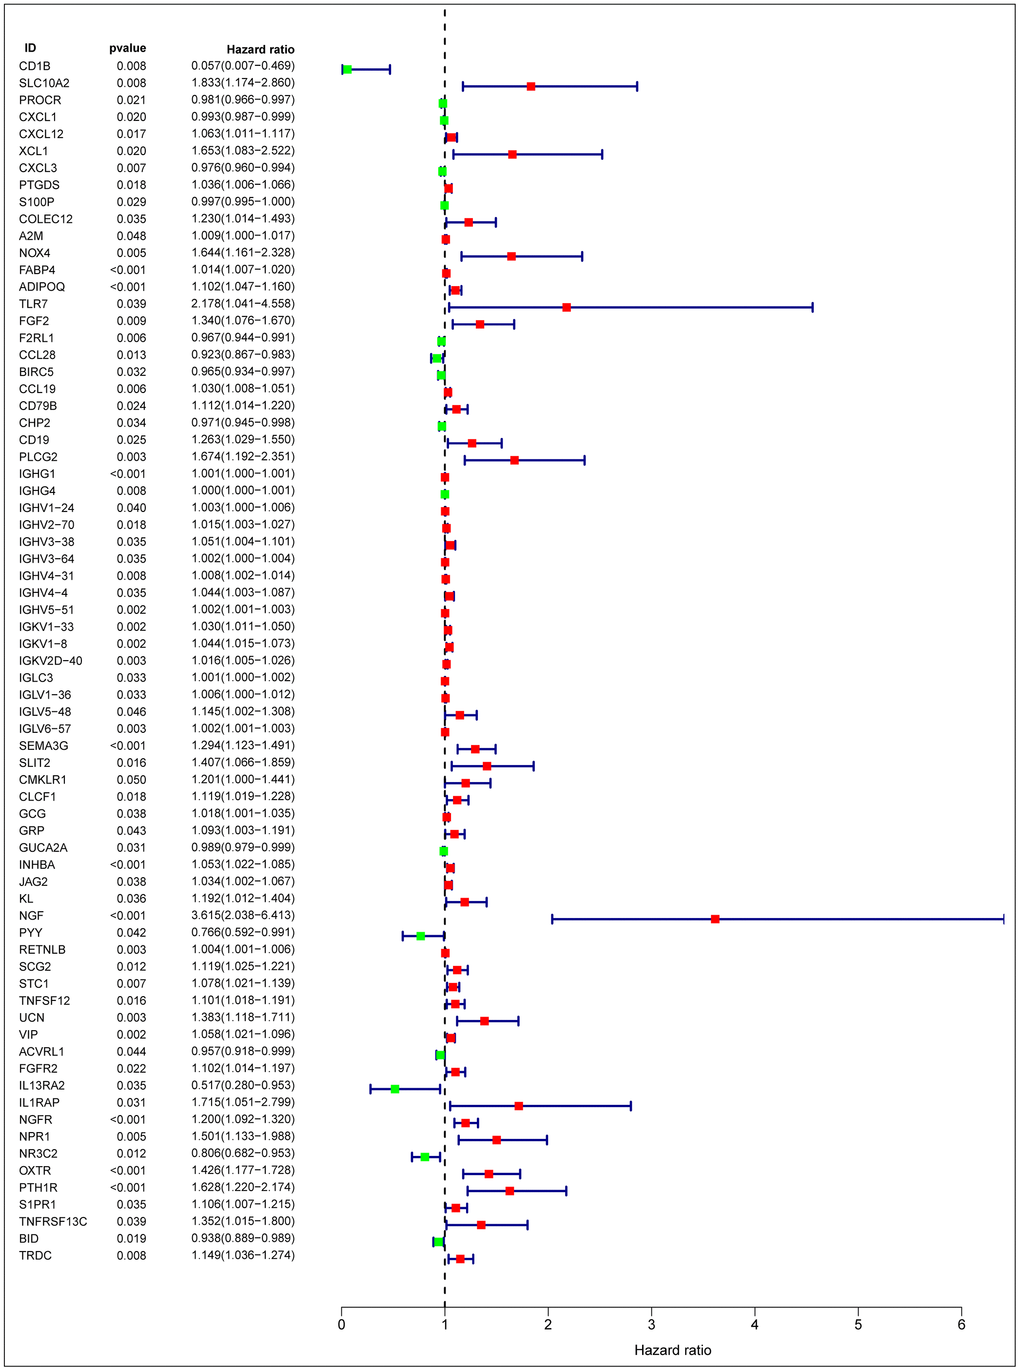 Forest plot of hazard ratios of prognostically relevant immune genes, revealing prognostic value in CRC.